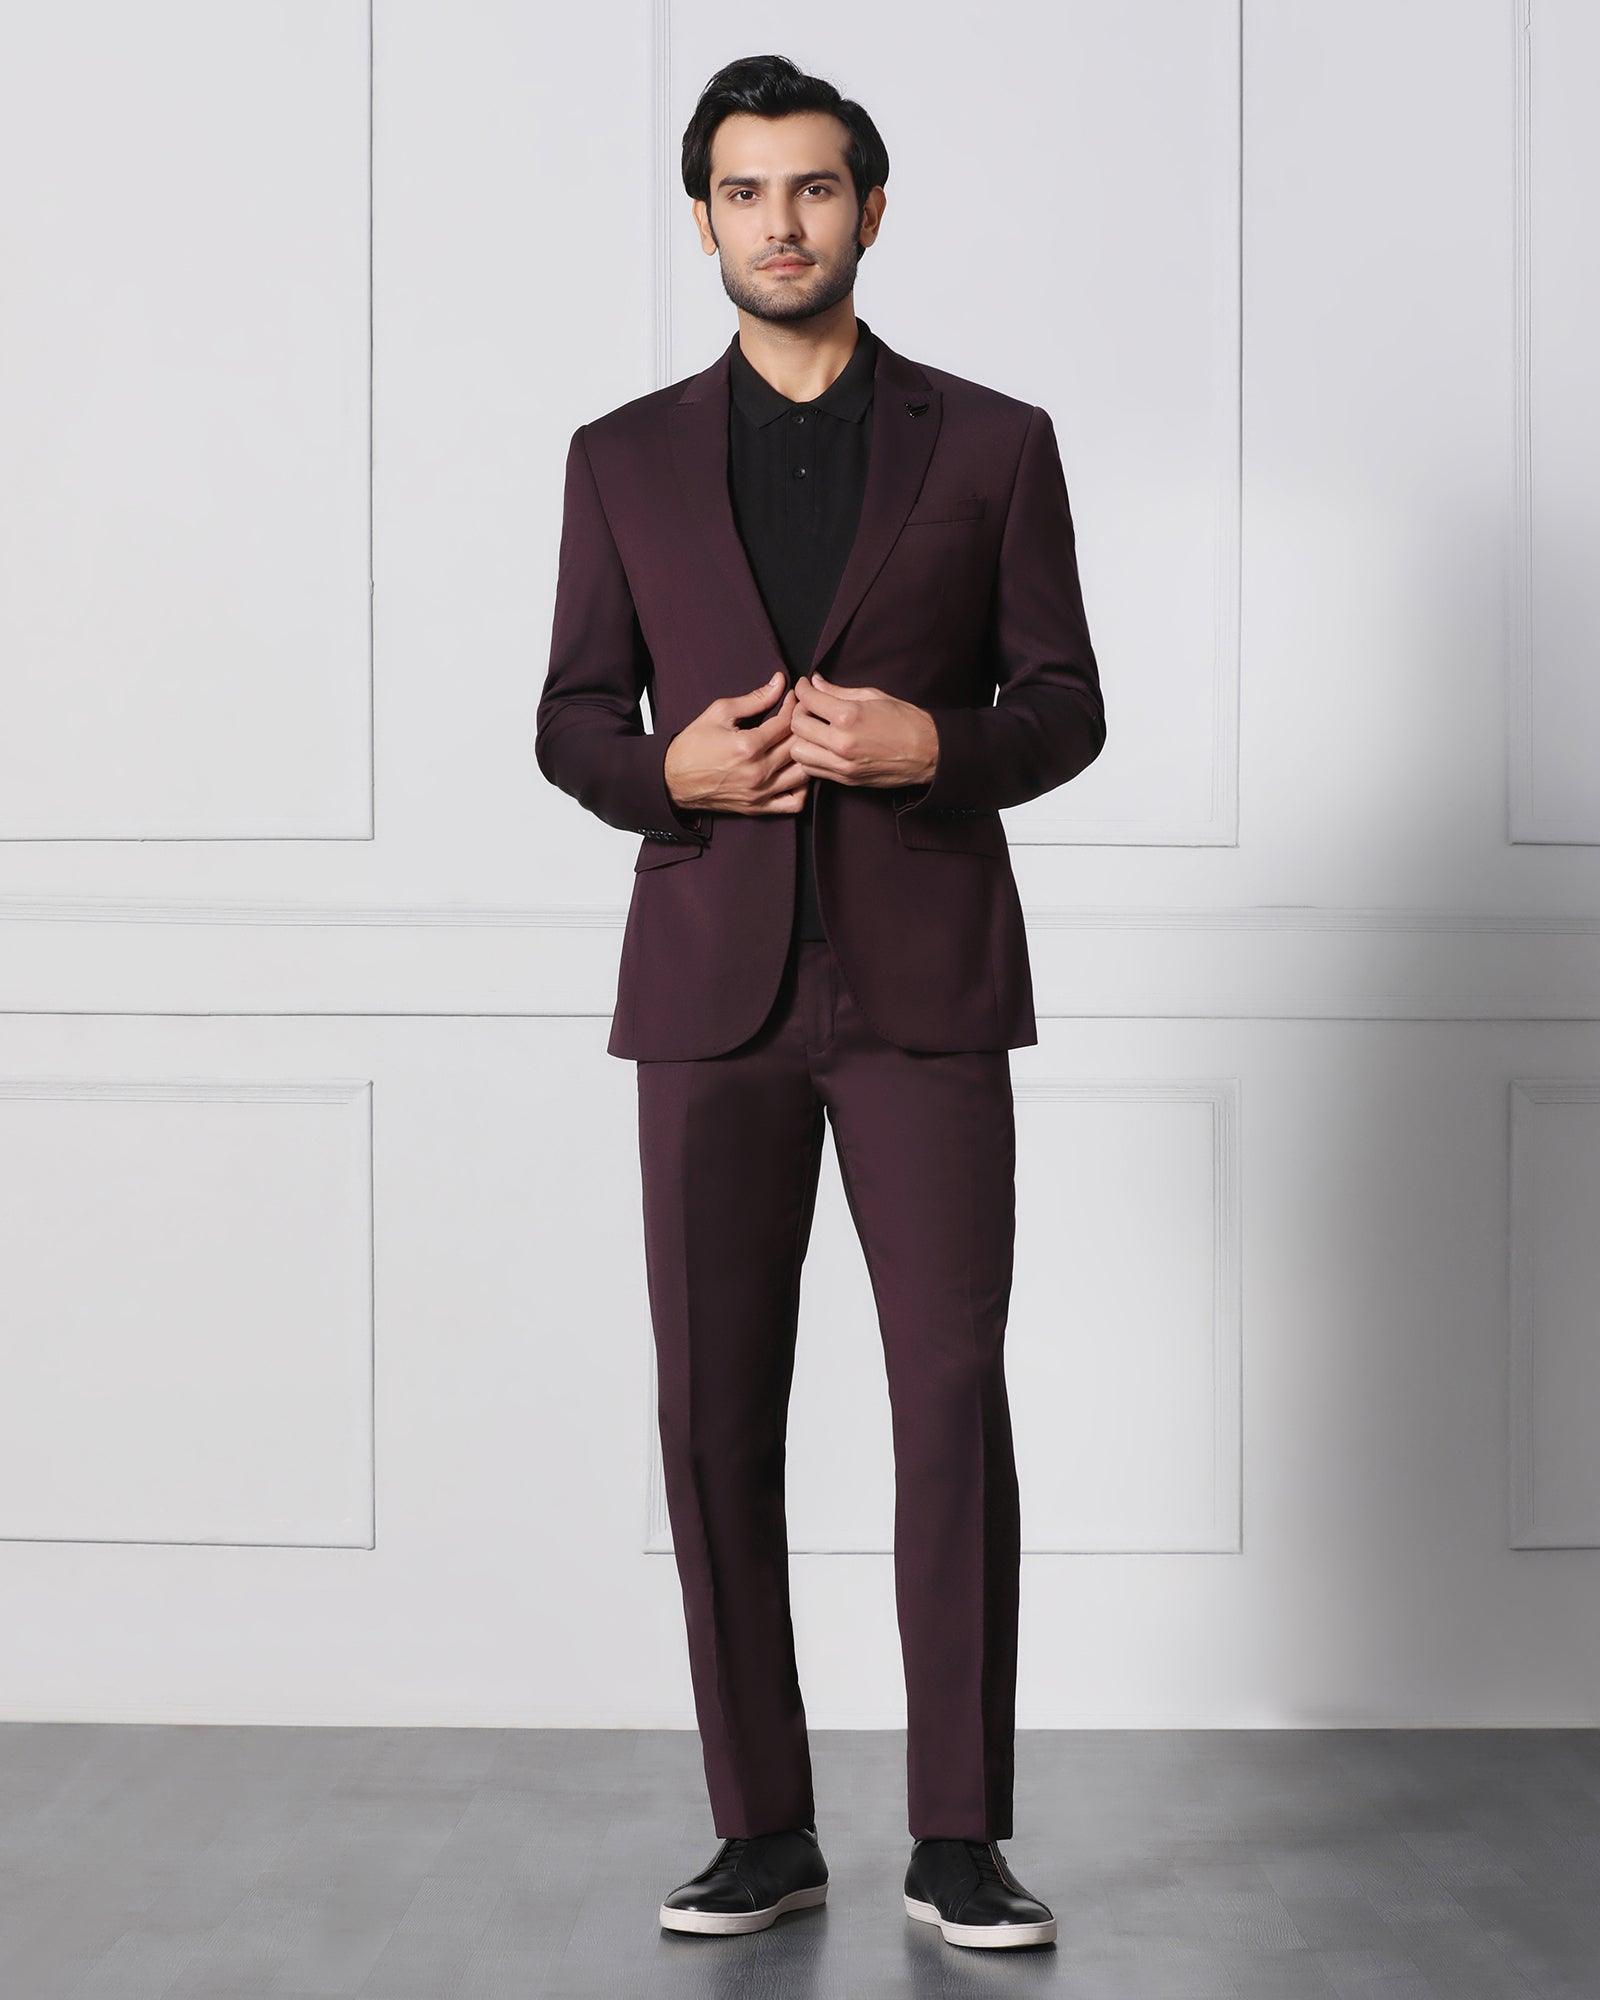 Men's Burgundy Suit | Suits for Weddings & Events